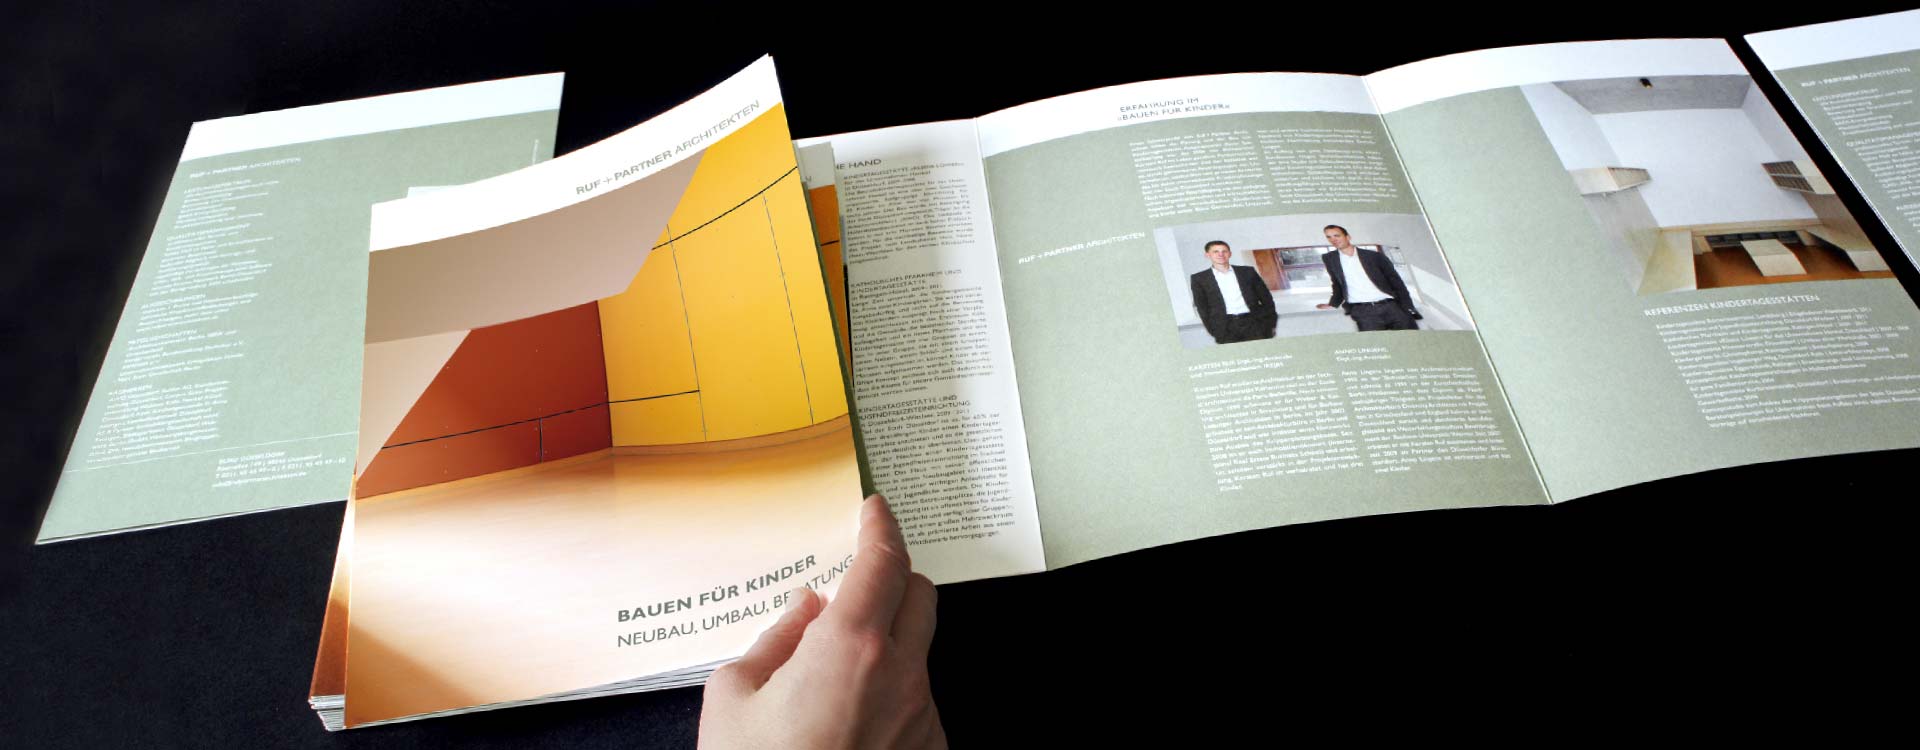 Leaflets for Ruf + Partner architects office; Design: Kattrin Richter | Graphic Design Studio